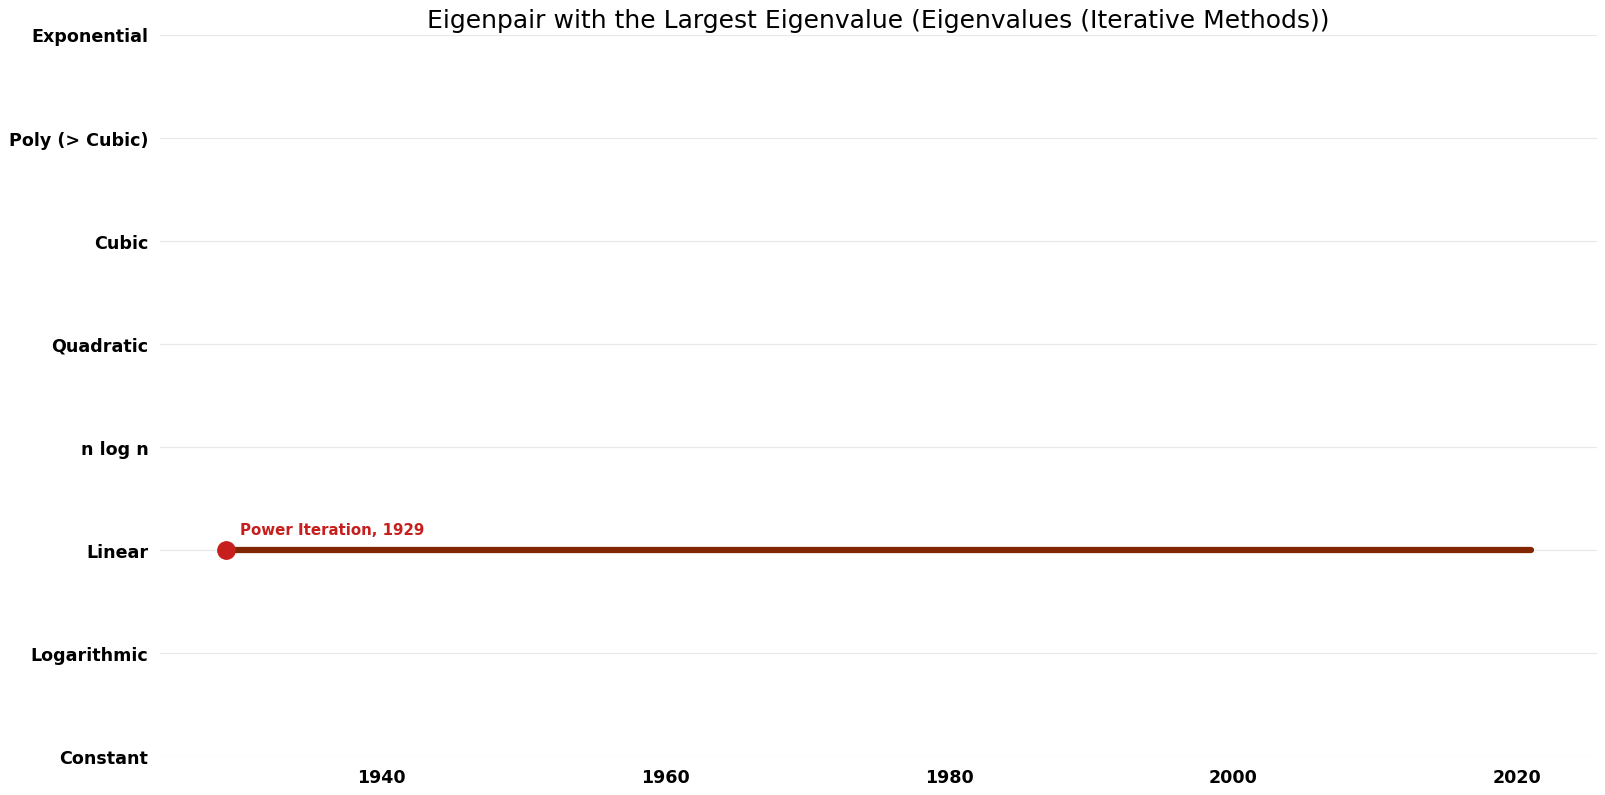 Eigenvalues (Iterative Methods) - Eigenpair with the Largest Eigenvalue - Time.png